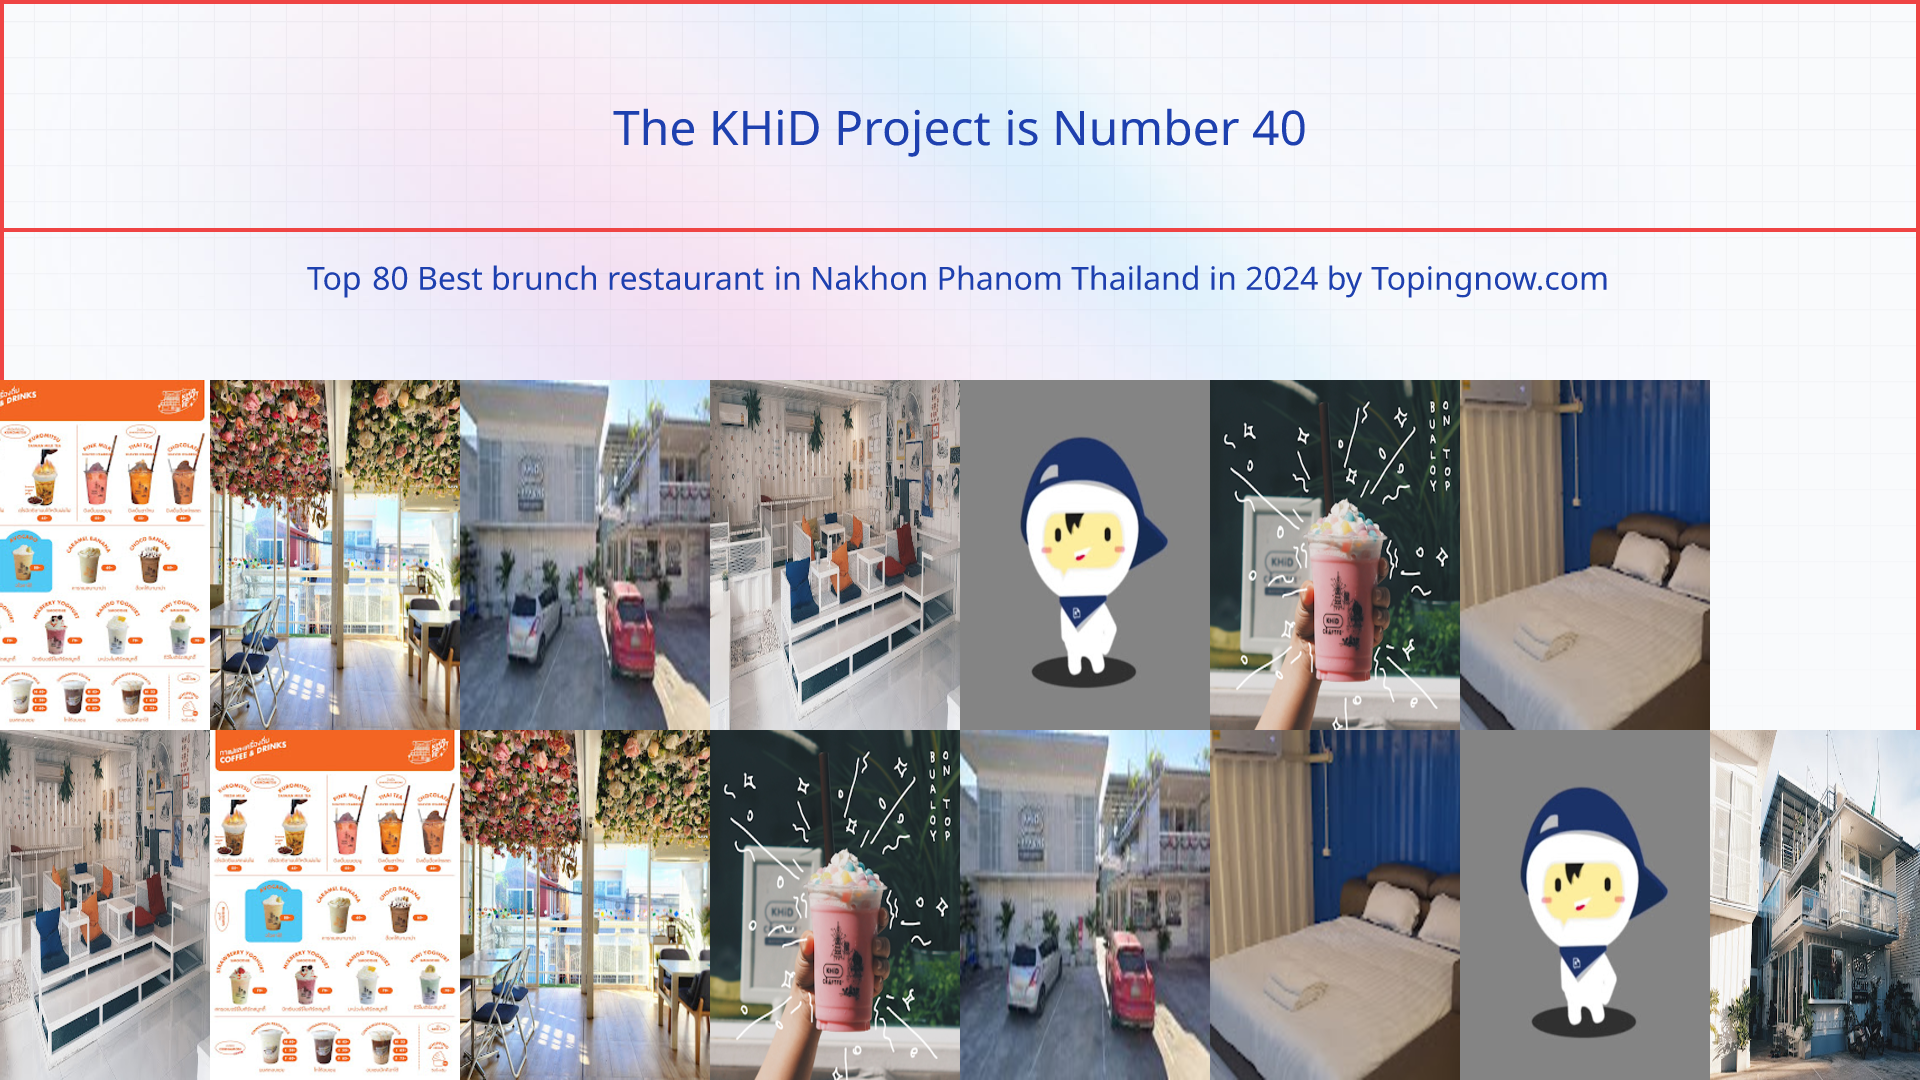 The KHiD Project: Top 80 Best brunch restaurant in Nakhon Phanom Thailand in 2024